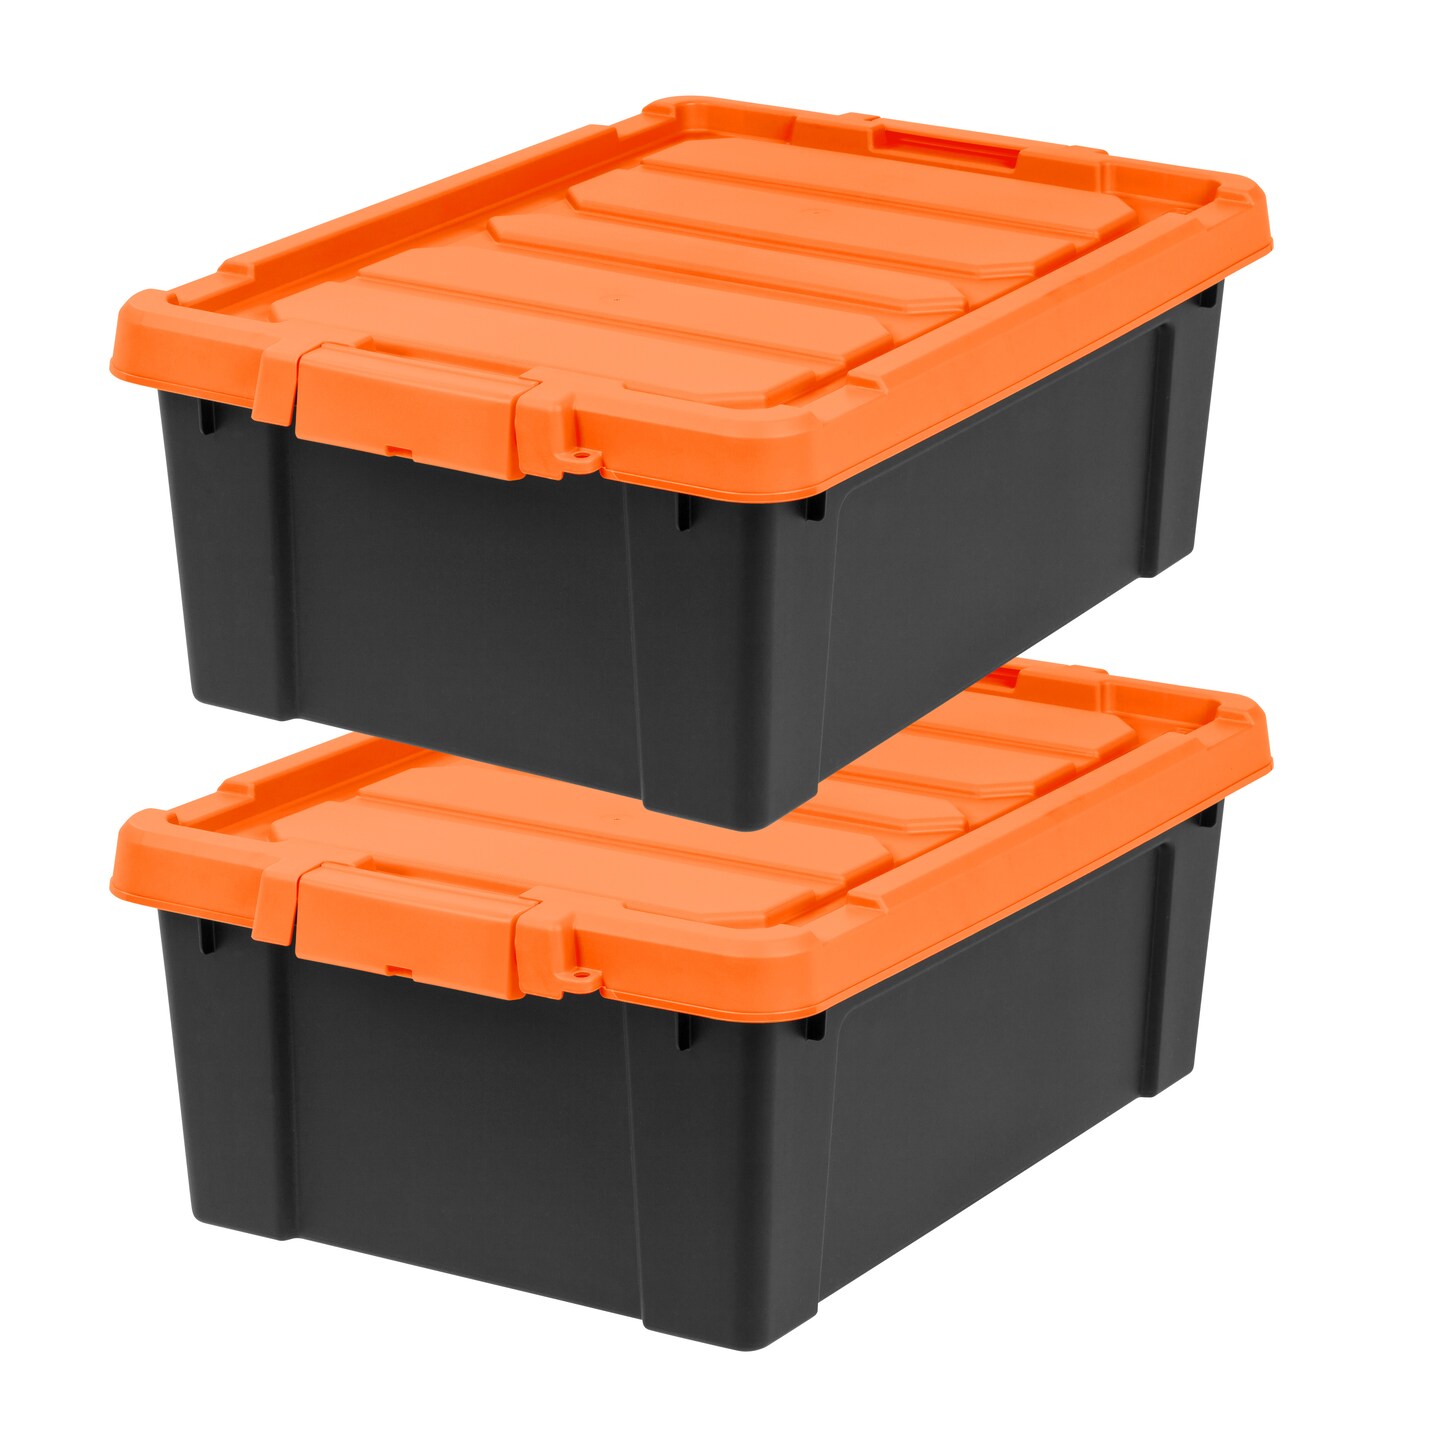 IRIS USA Heavy-Duty Plastic Storage Bins, Store-It-All Container